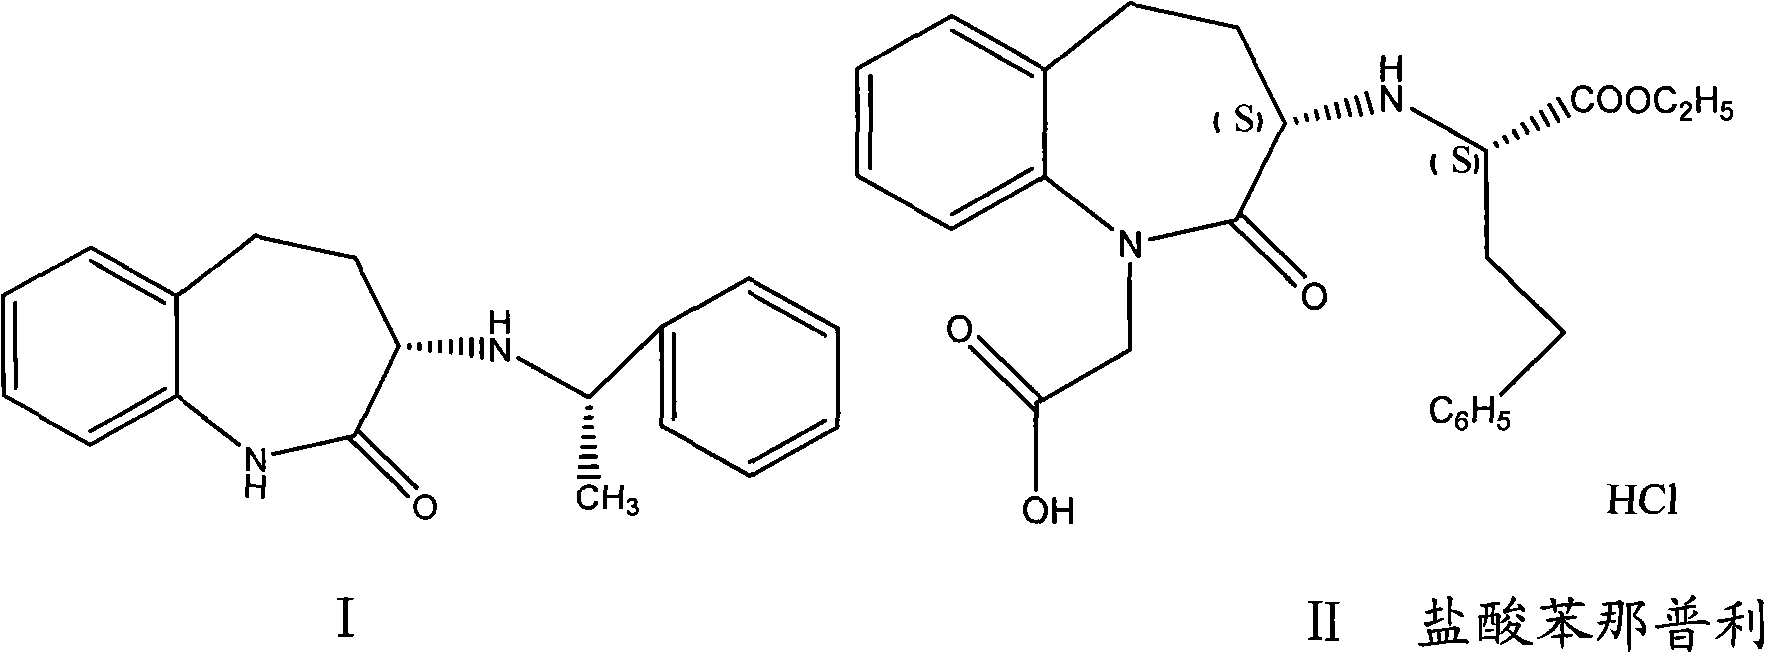 Preparation method of 3-[(1-(1S)-phenylethyl) amino]-2,3,4,5-tetrahydro-2-oxo-1H-(3S)-benzazepine